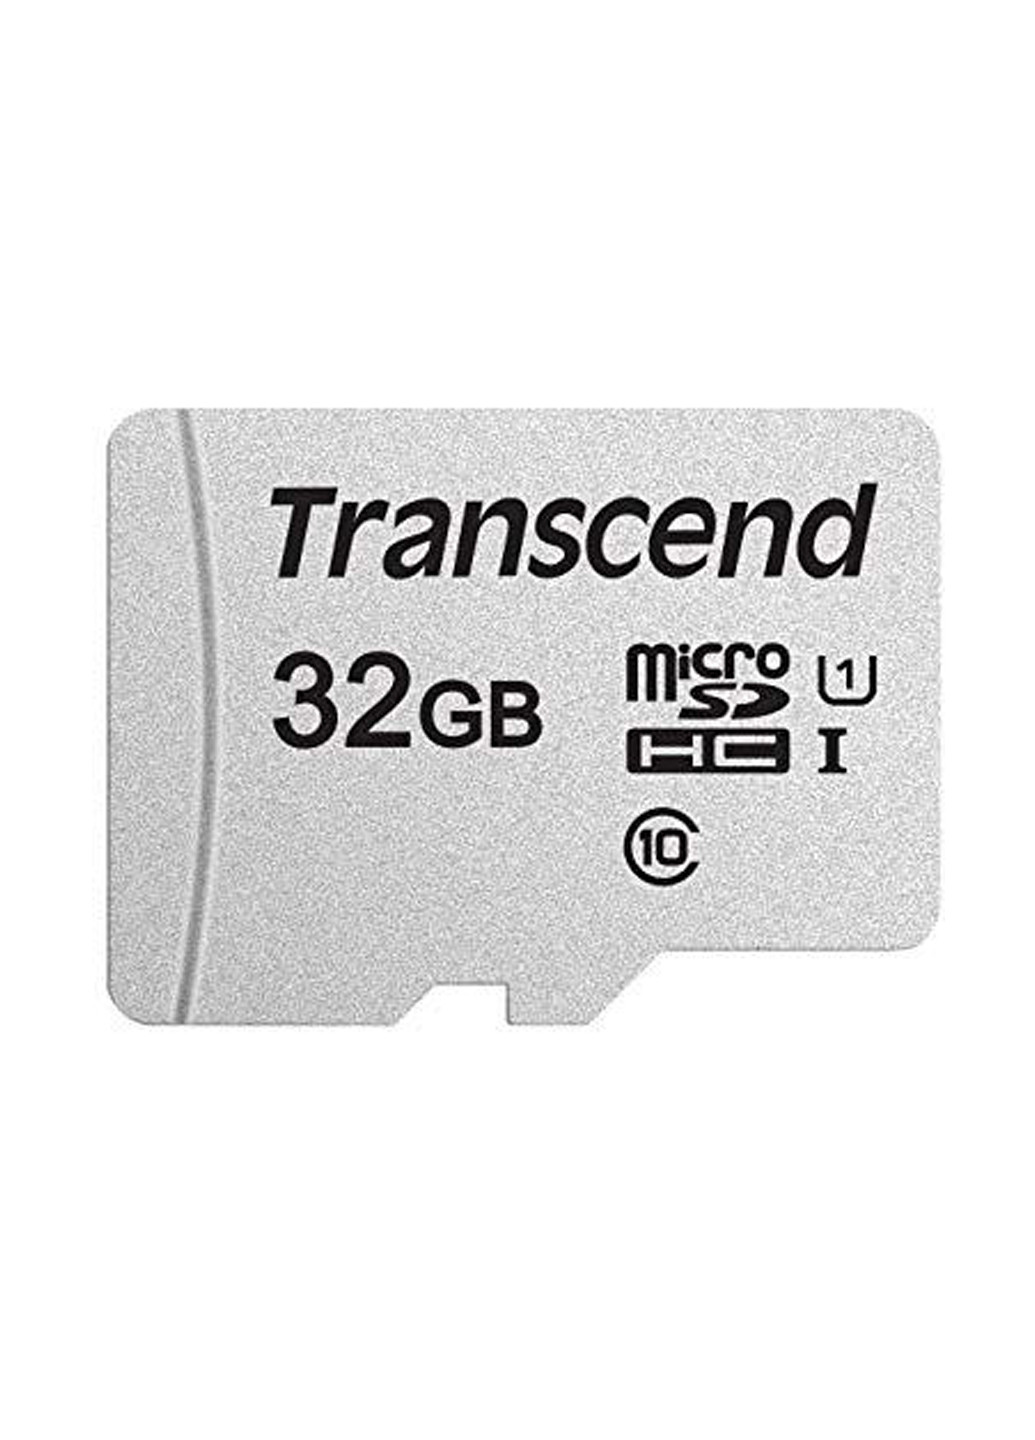 Карта памяти microSDHC 32GB C10 UHS-I (R95/W45MB/s) (TS32GUSD300S) Transcend Карта памяти Transcend microSDHC 32GB C10 UHS-I (R95/W45MB/s) (TS32GUSD300S) чёрные